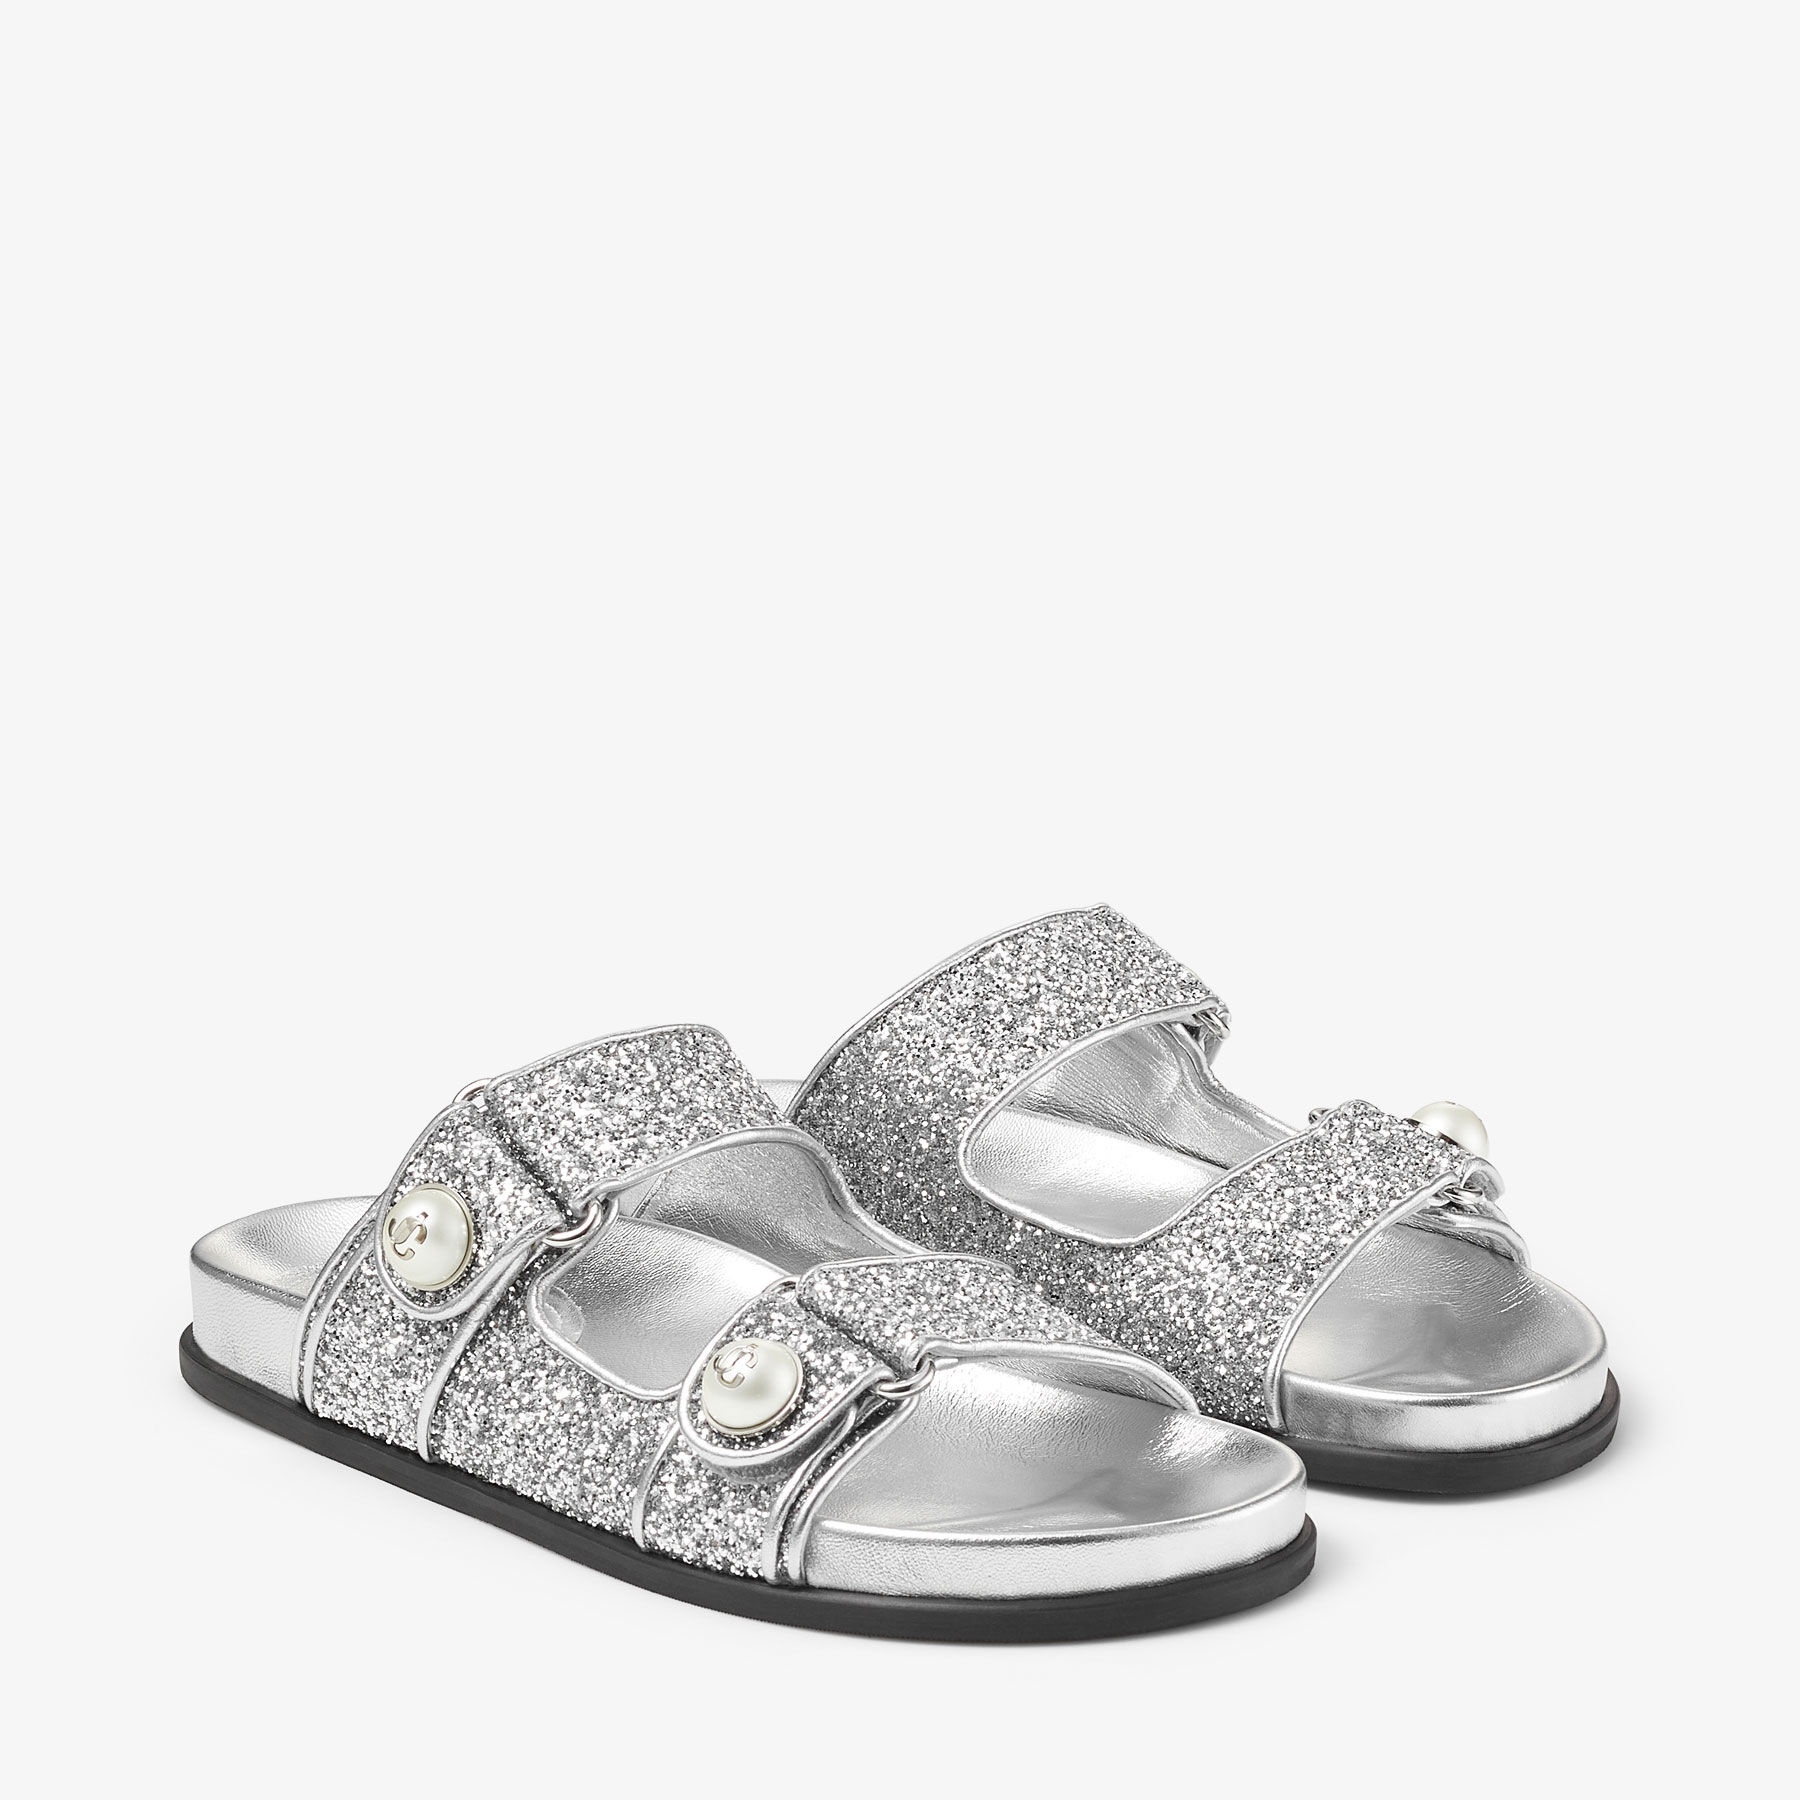 Fayence Sandal
Silver Metallic Nappa Sandals - 2